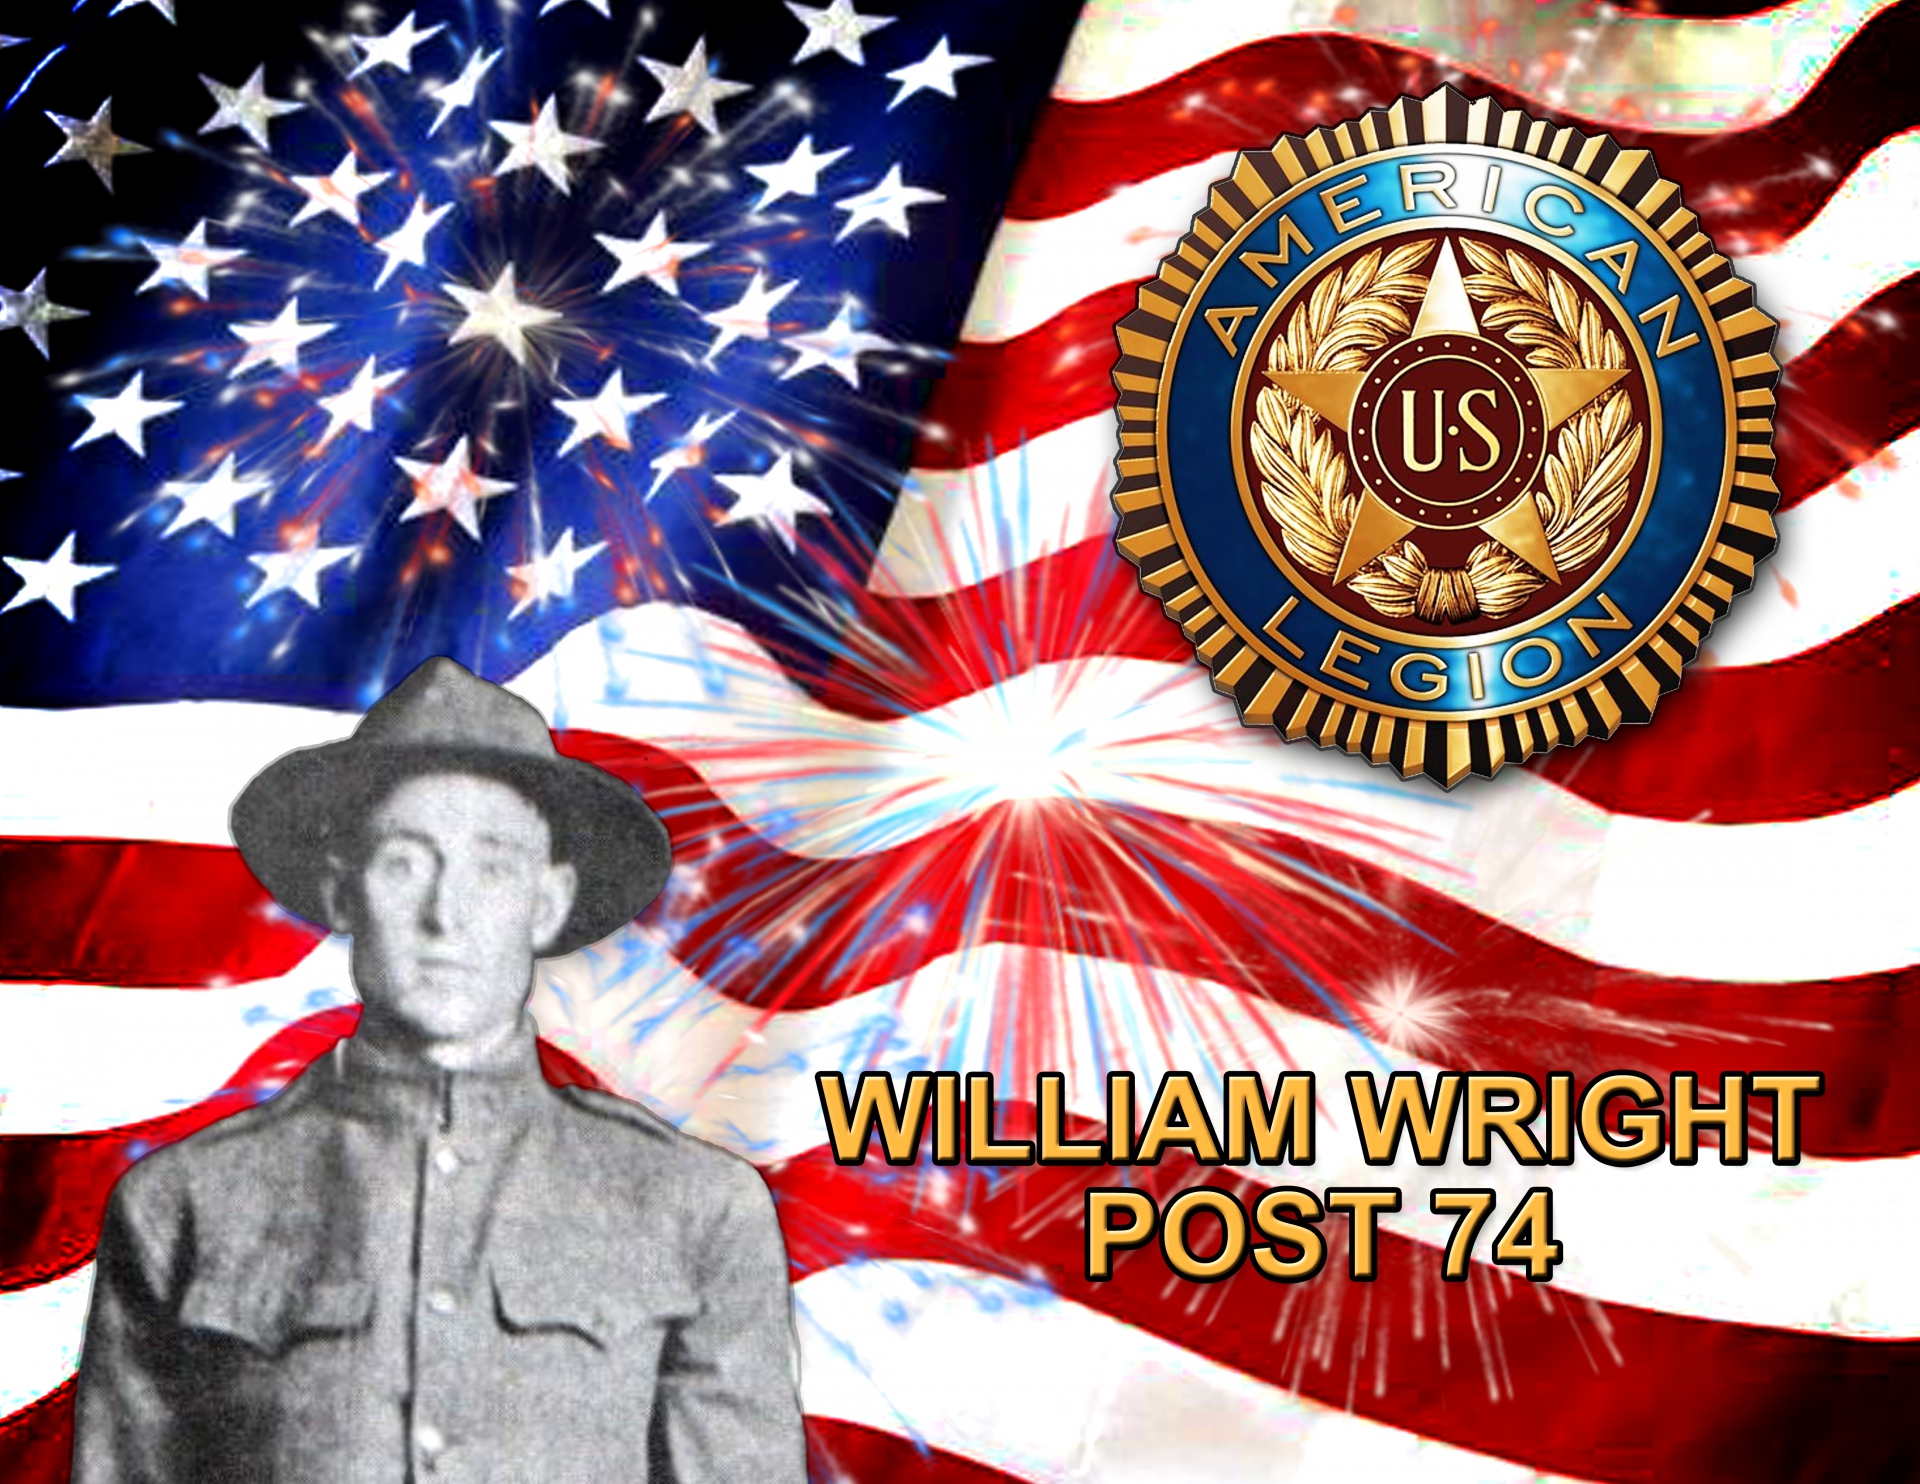 Post 74 Wright City, Oklahoma | The American Legion Centennial Celebration